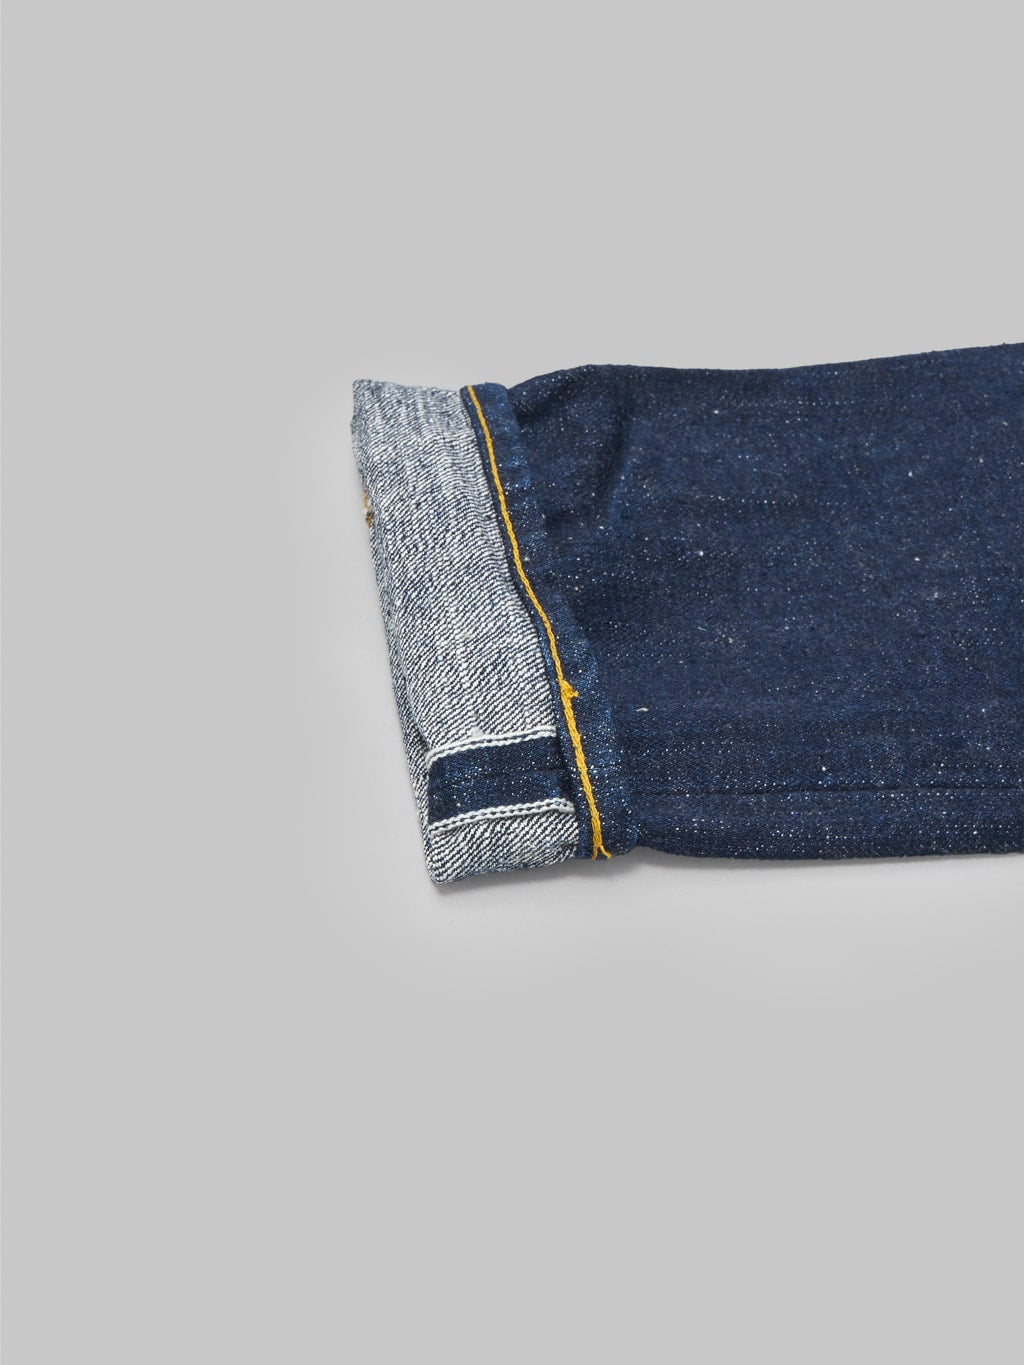 samurai jeans s211ax ai benkei natural indigo 18oz relaxed tapered jeans closeup